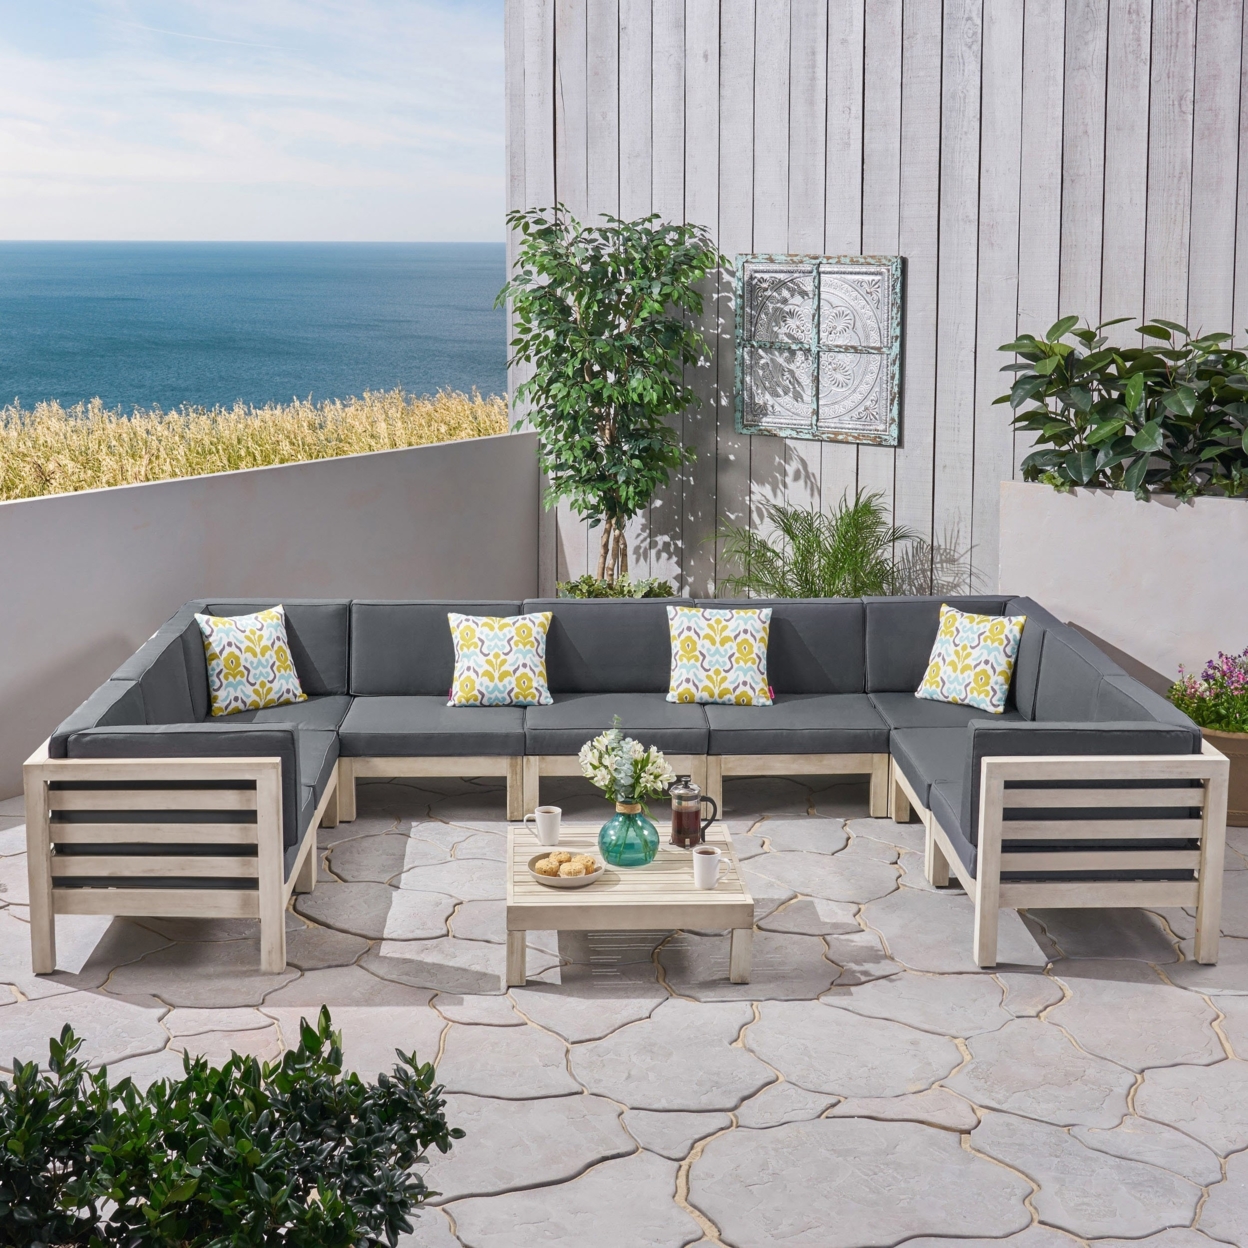 Ava Outdoor 9 Seater Acacia Wood Sectional Sofa Set, Weathered Gray Finish And Dark Gray